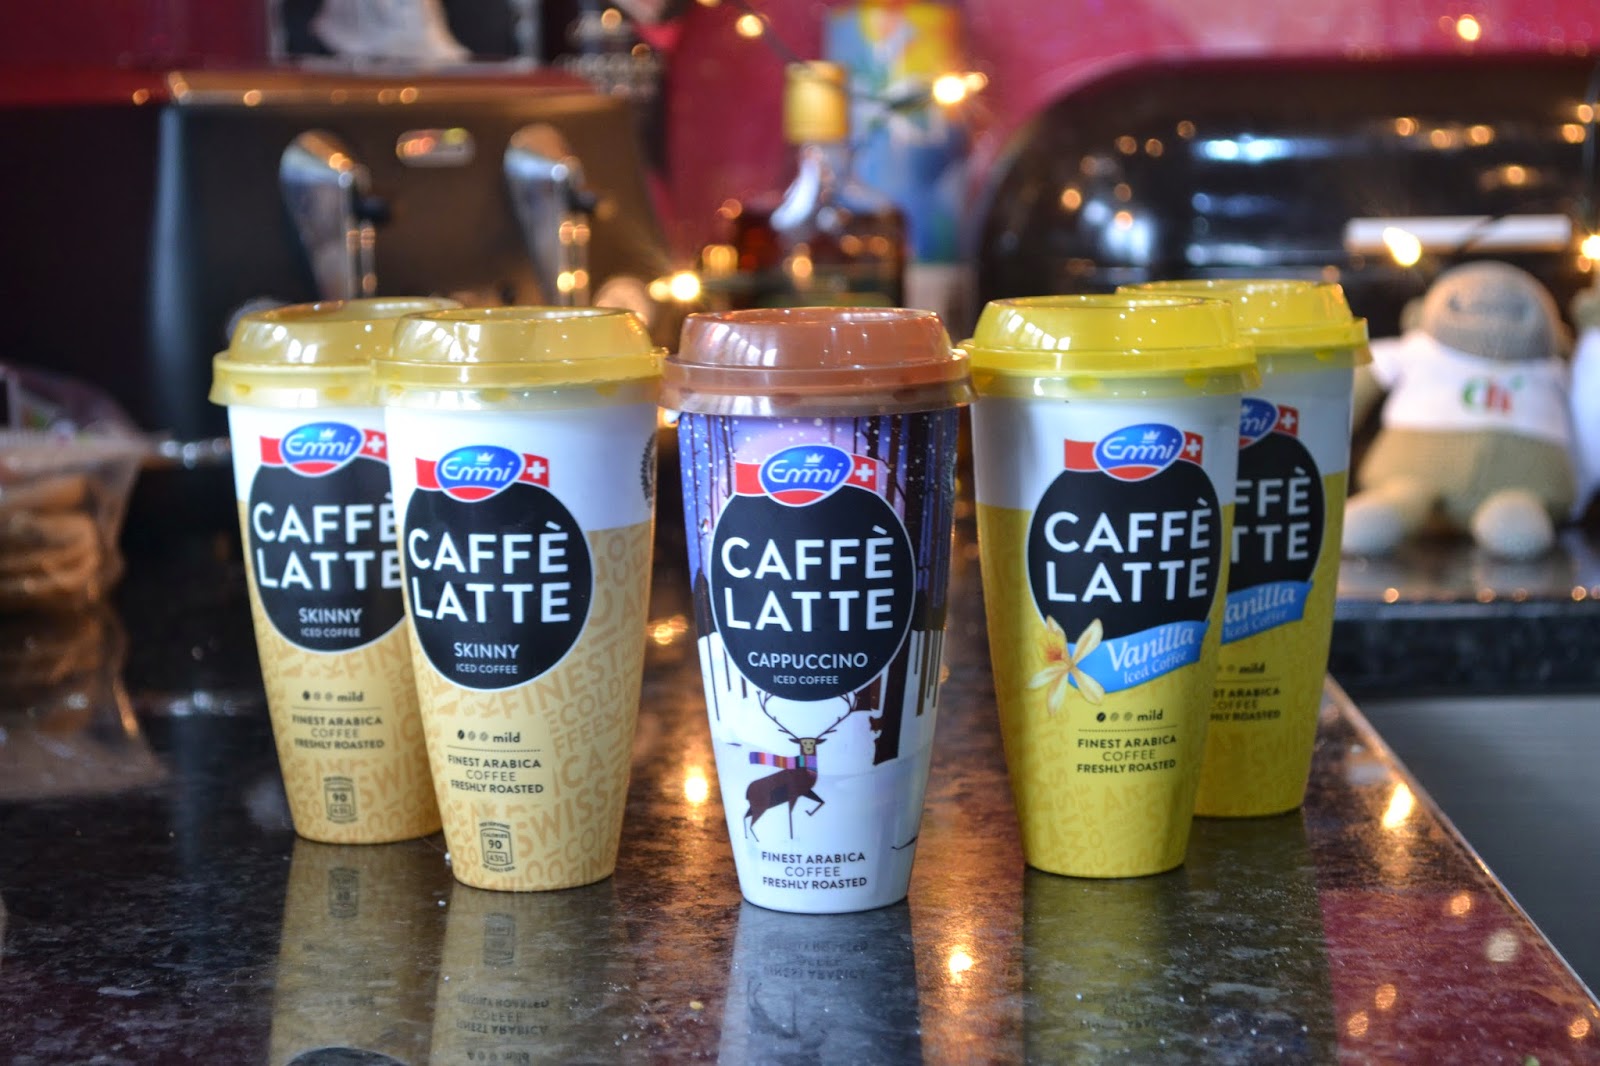 Emmi Caffè Latte